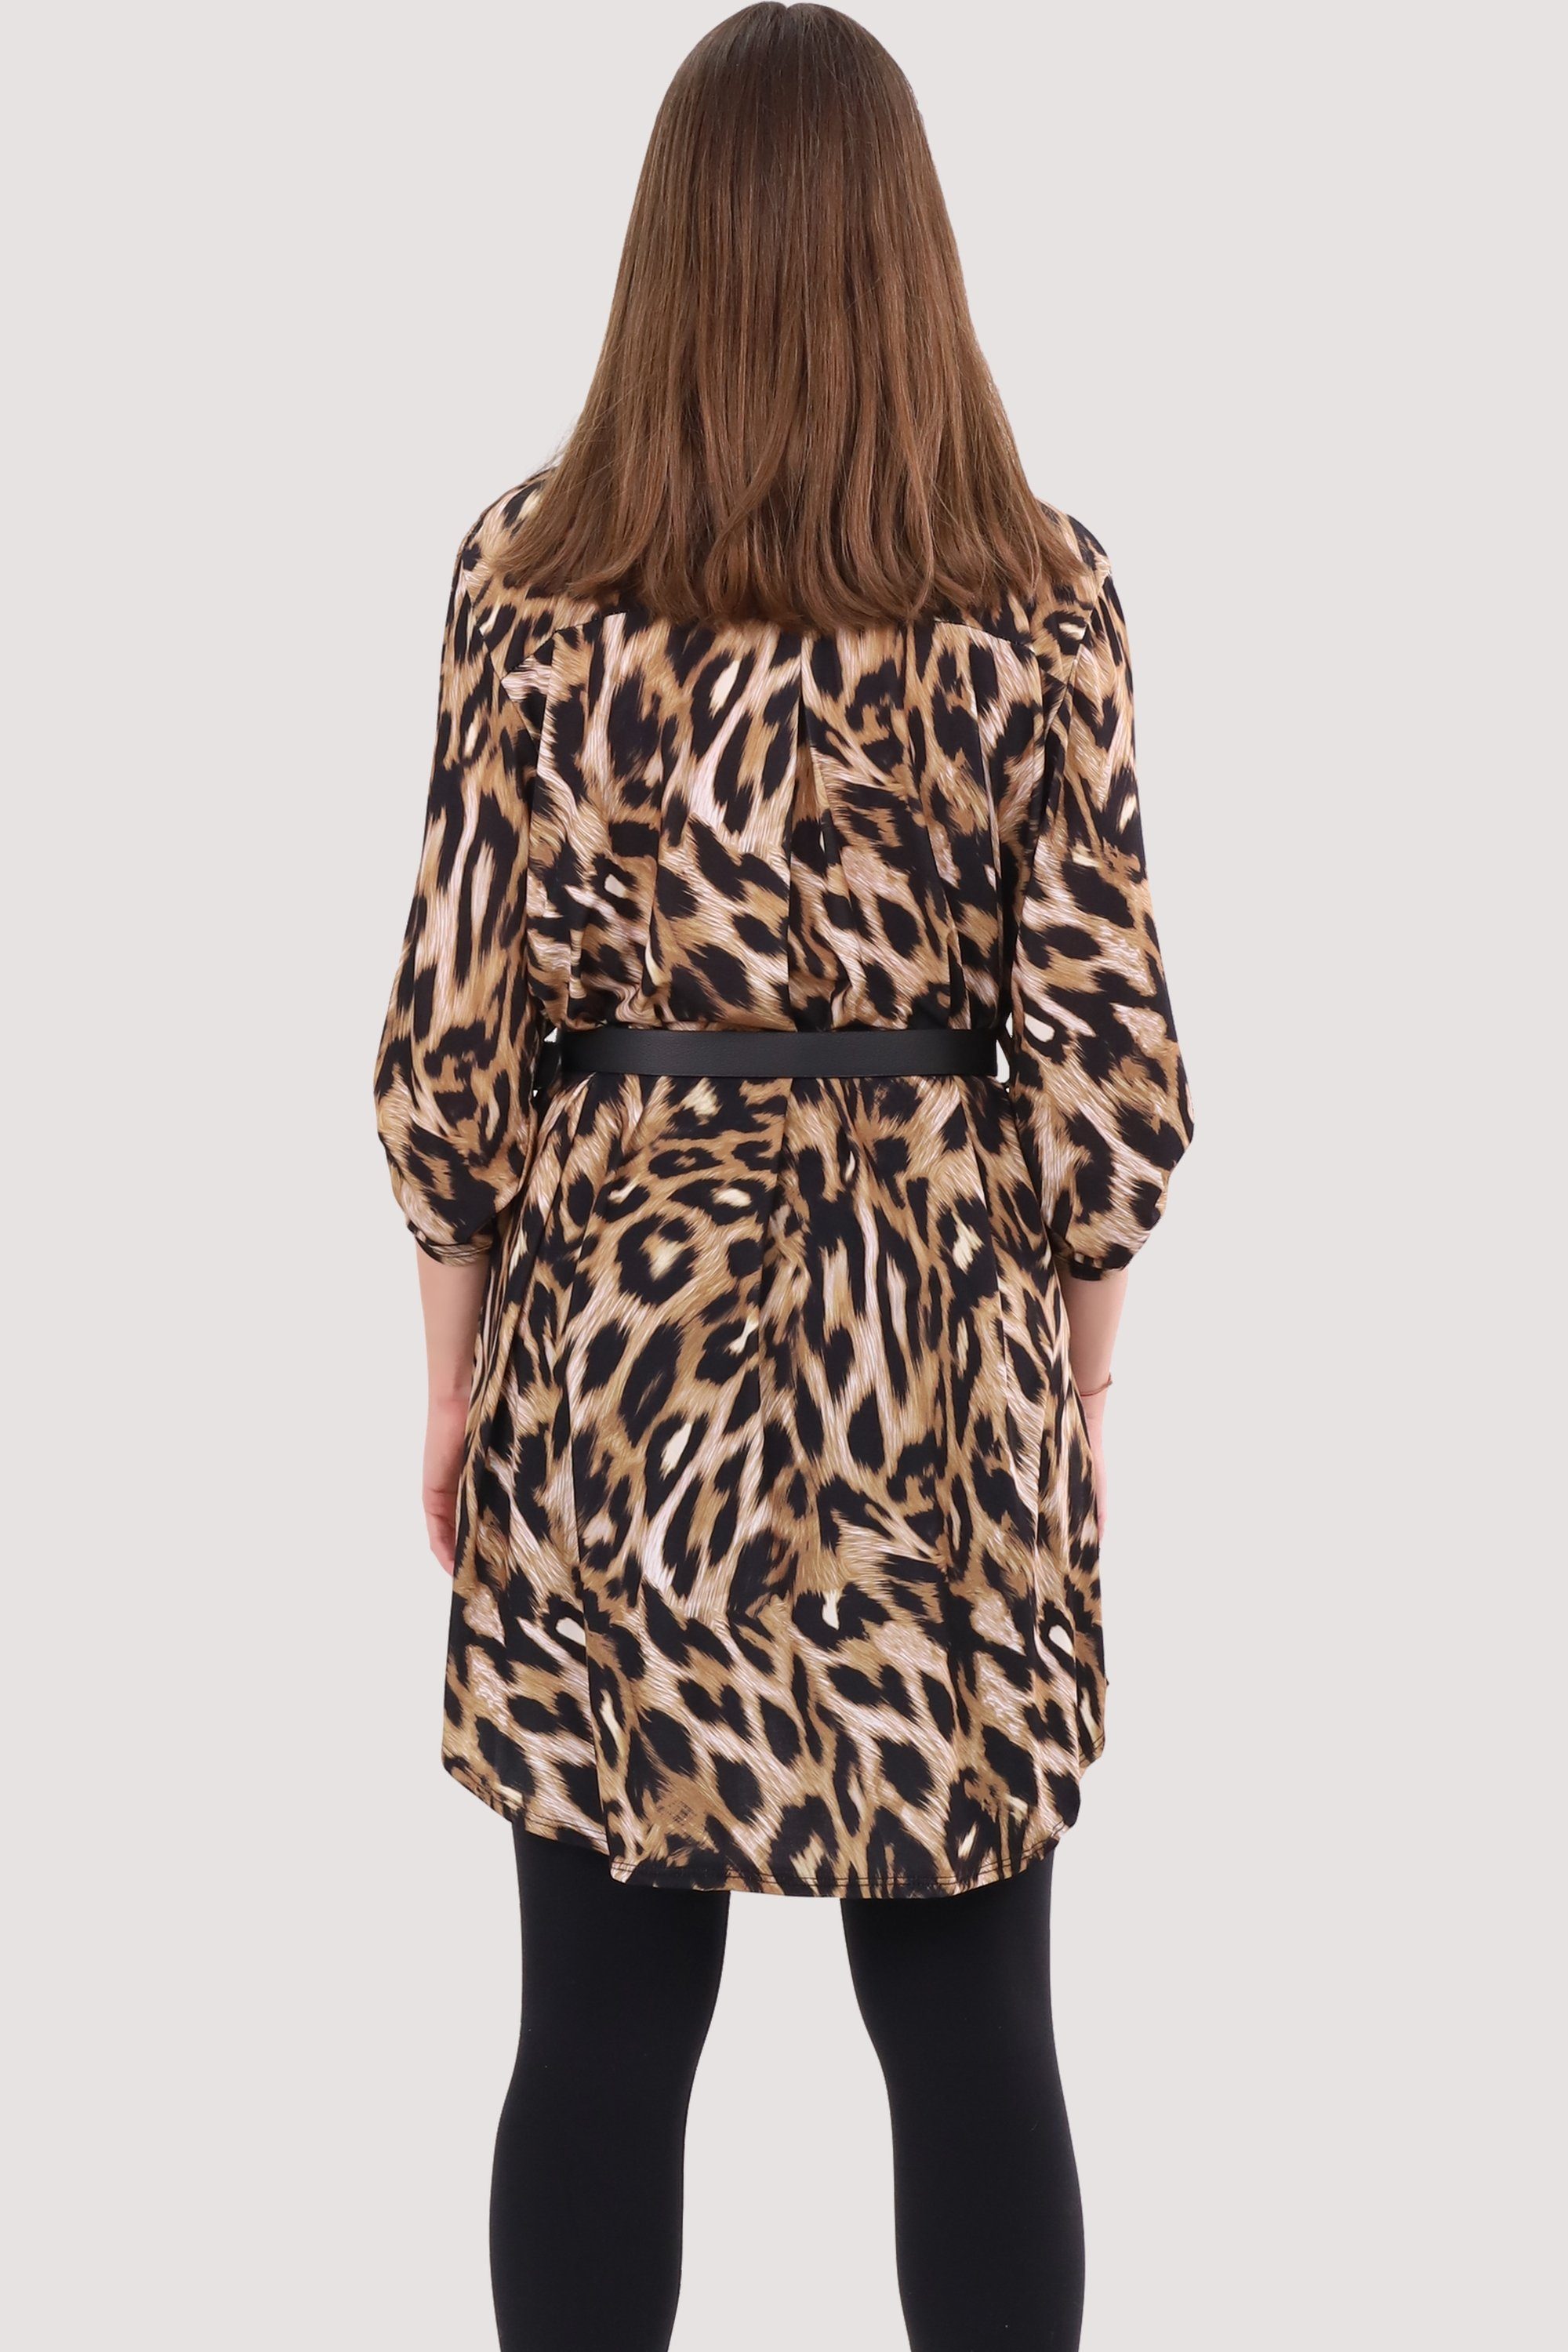 Druckkleid Animalprint 23203 than Gürtel Einheitsgröße 3 Kleid malito more fashion Bluse Gepard Tunika mit